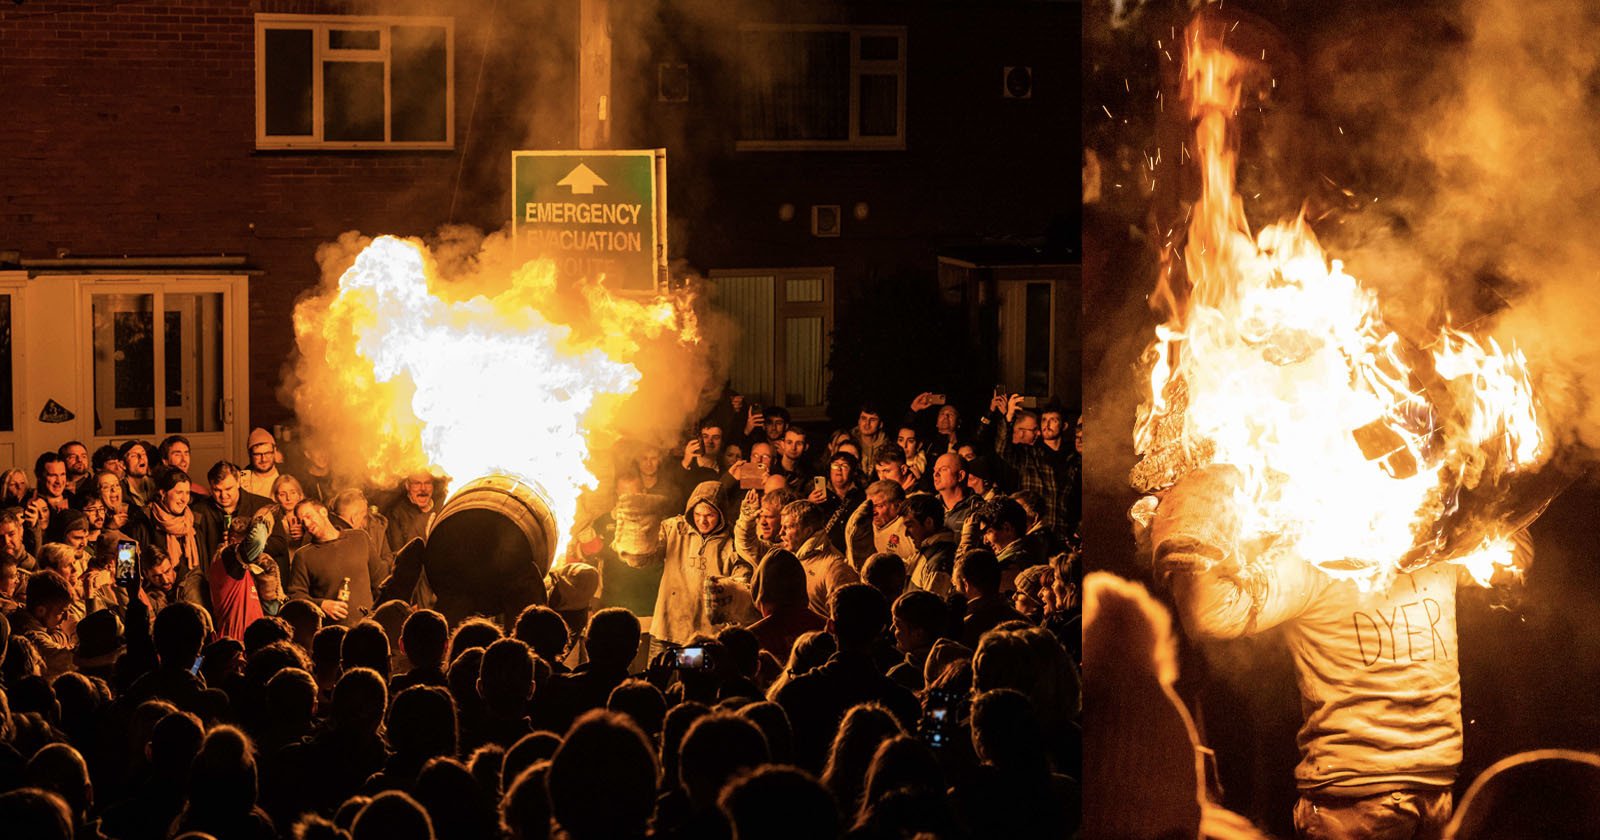 Wild Photos of Bizarre British Tradition Where Flaming Barrels Are Hauled Through Village